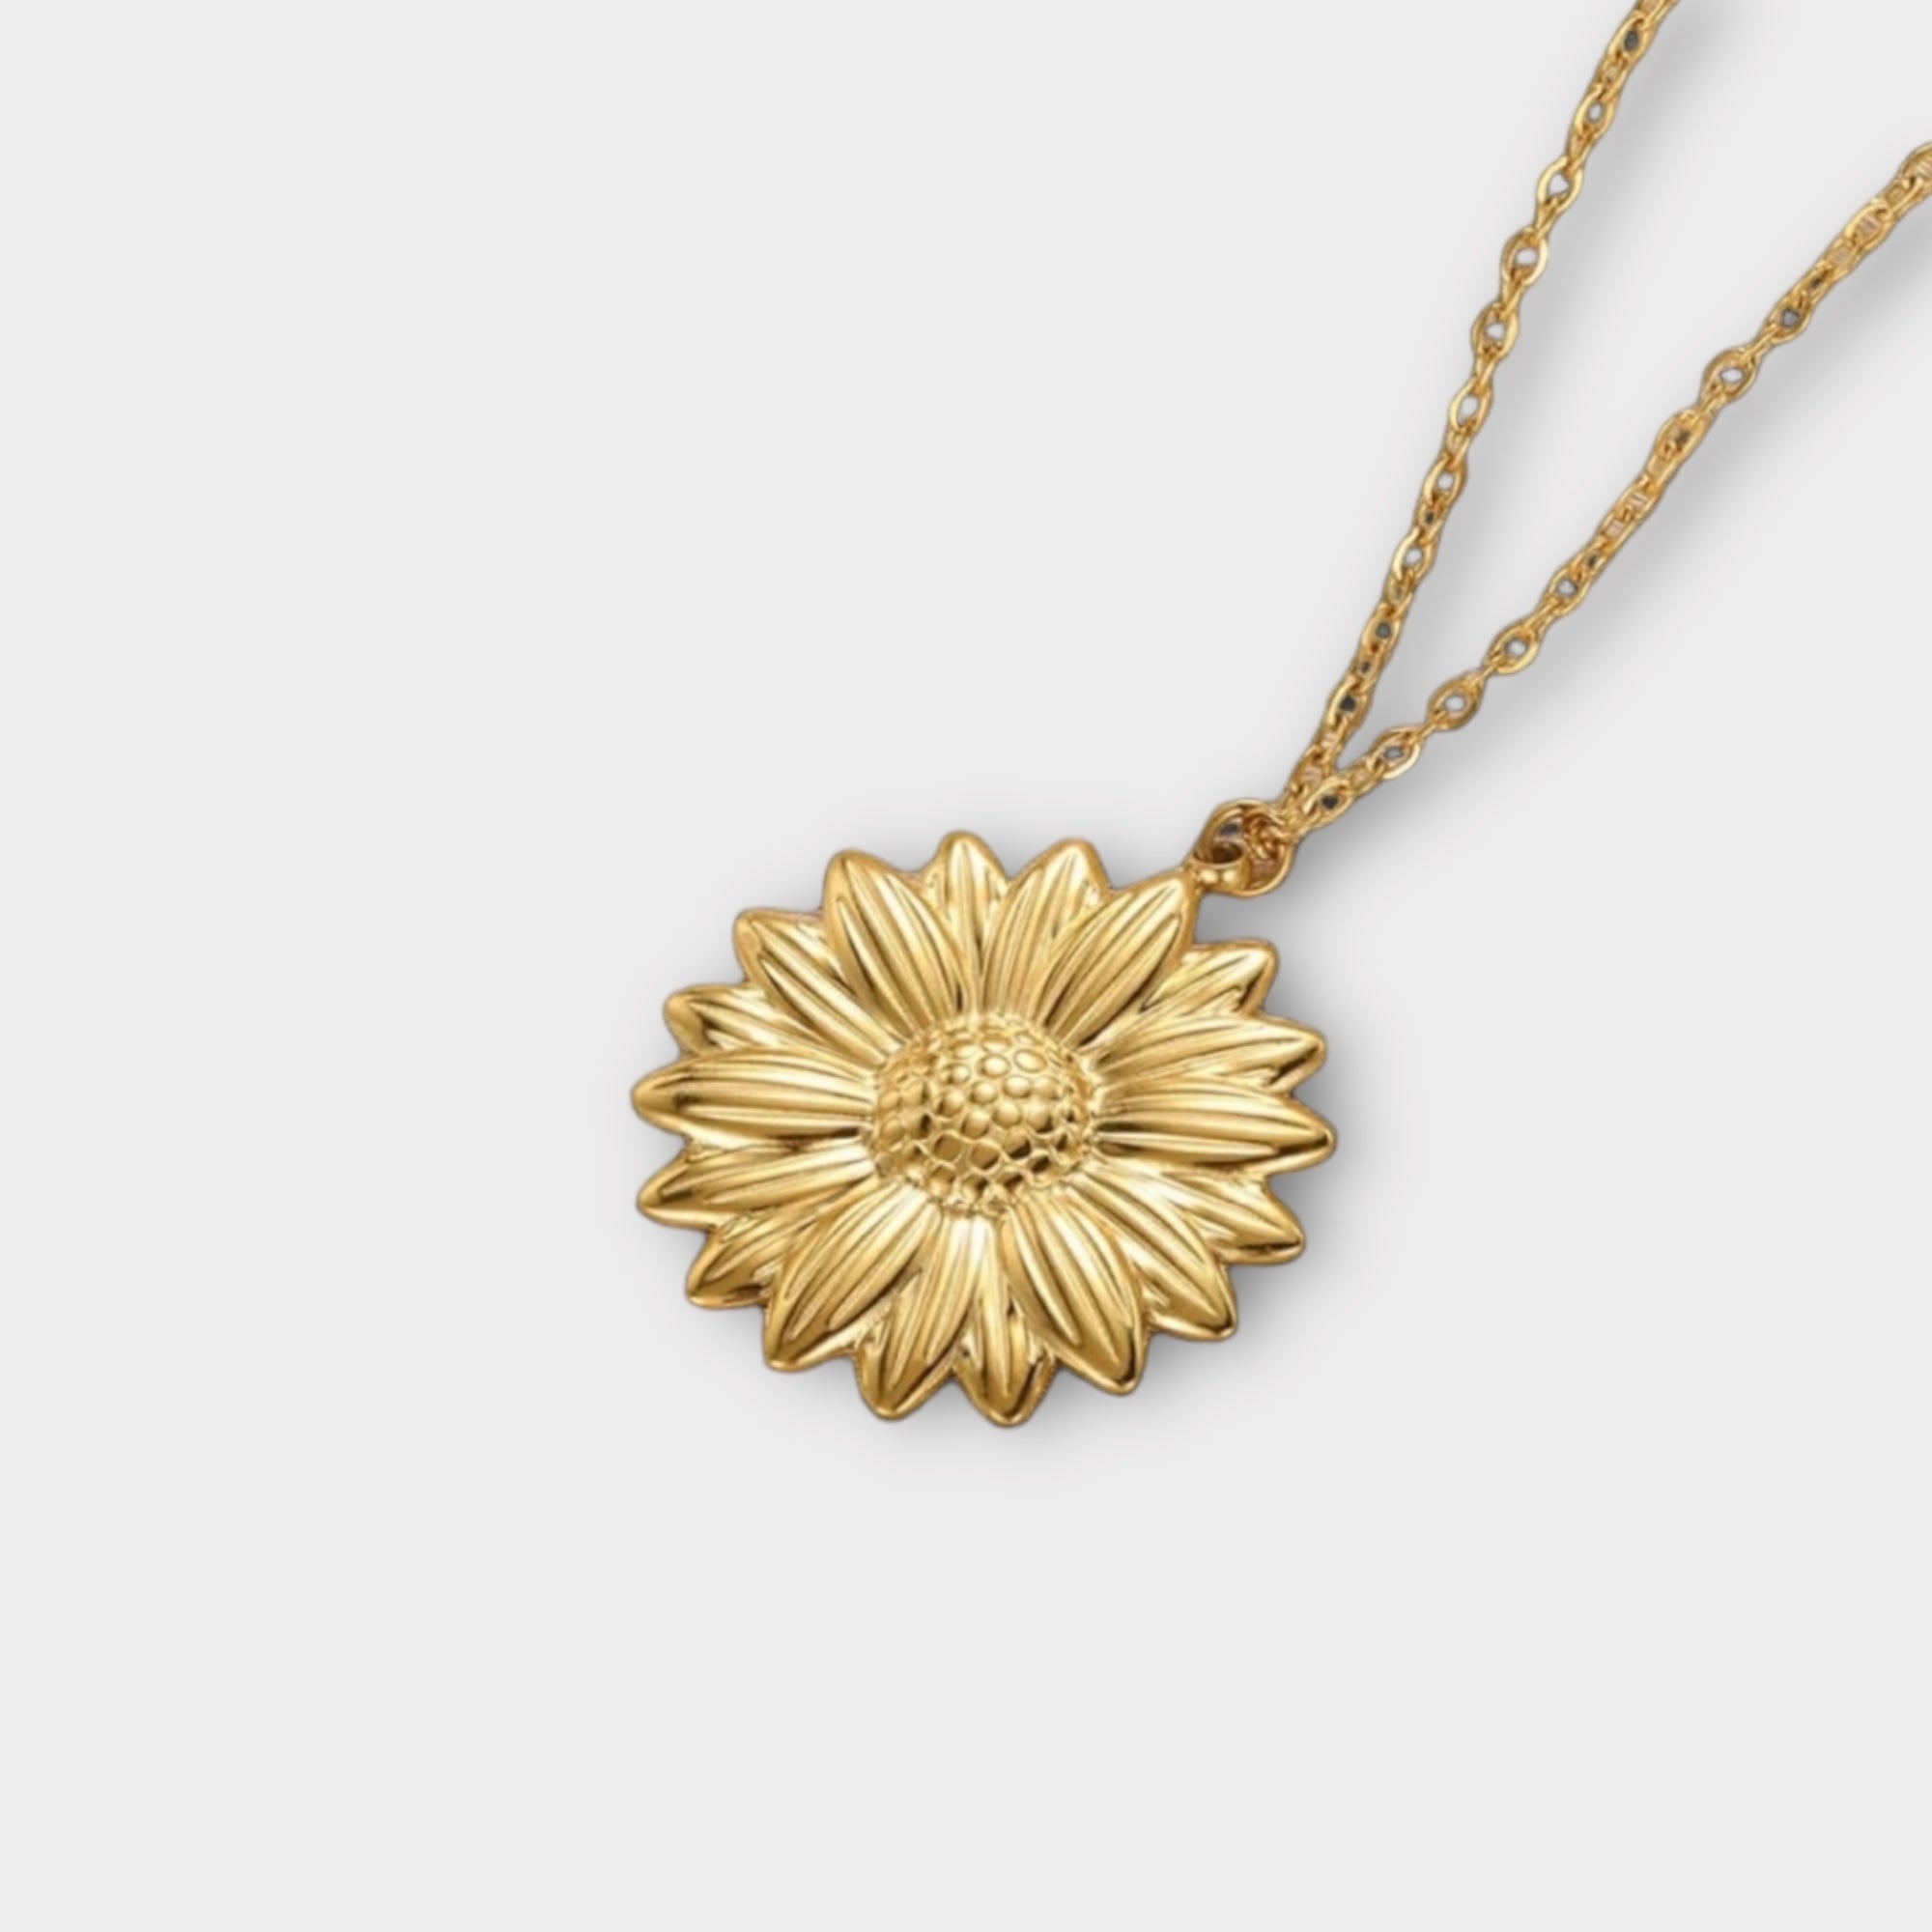 'SUNE' Open sunflower pendant jewelry